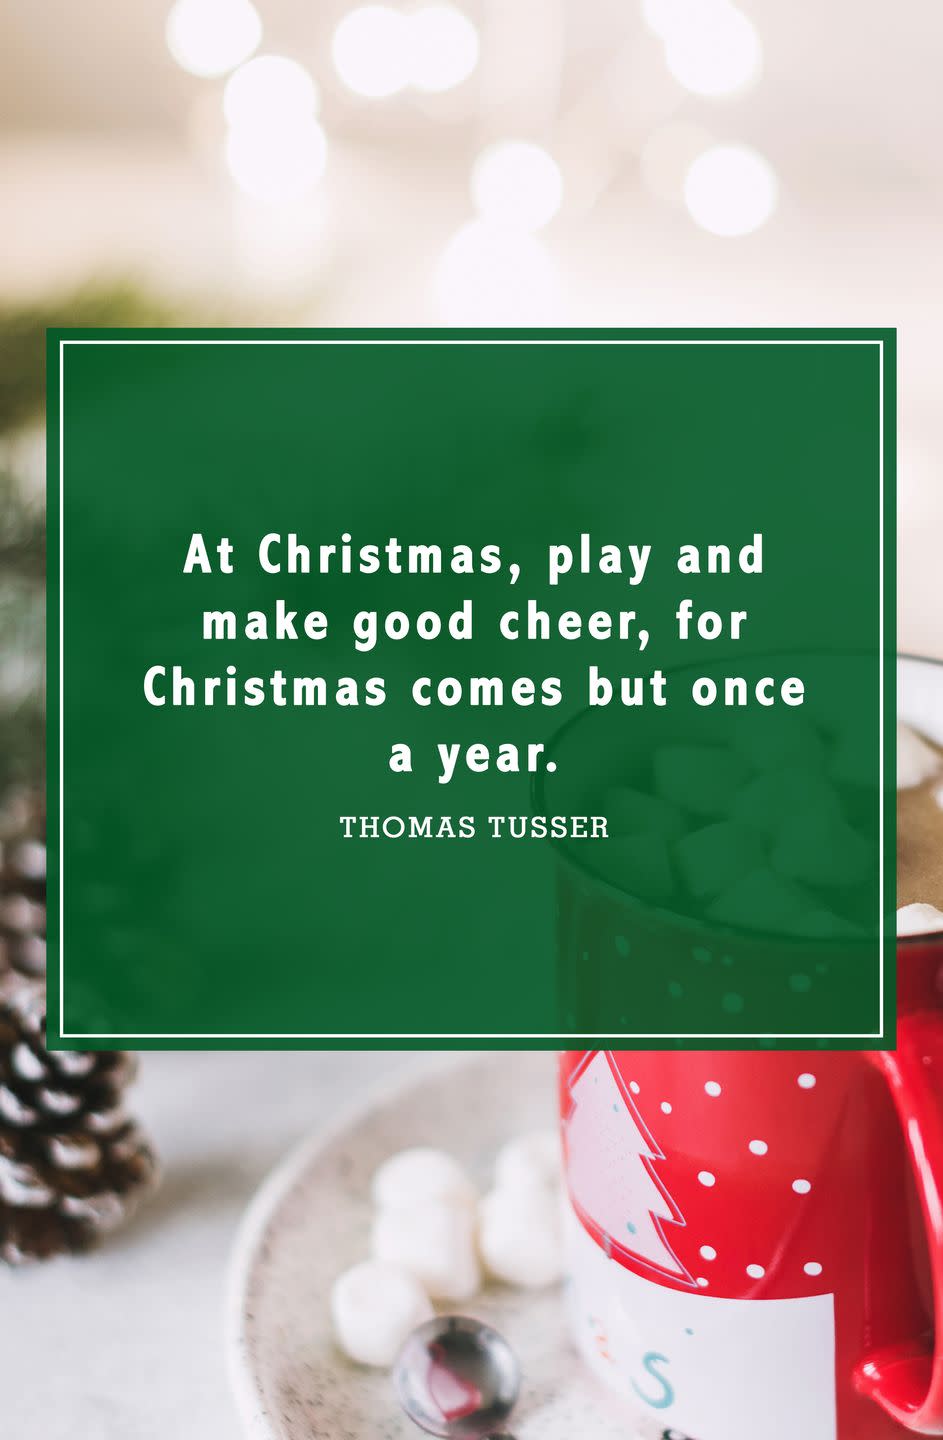 <p>“At Christmas, play and make good cheer, for Christmas comes but once a year.”</p>